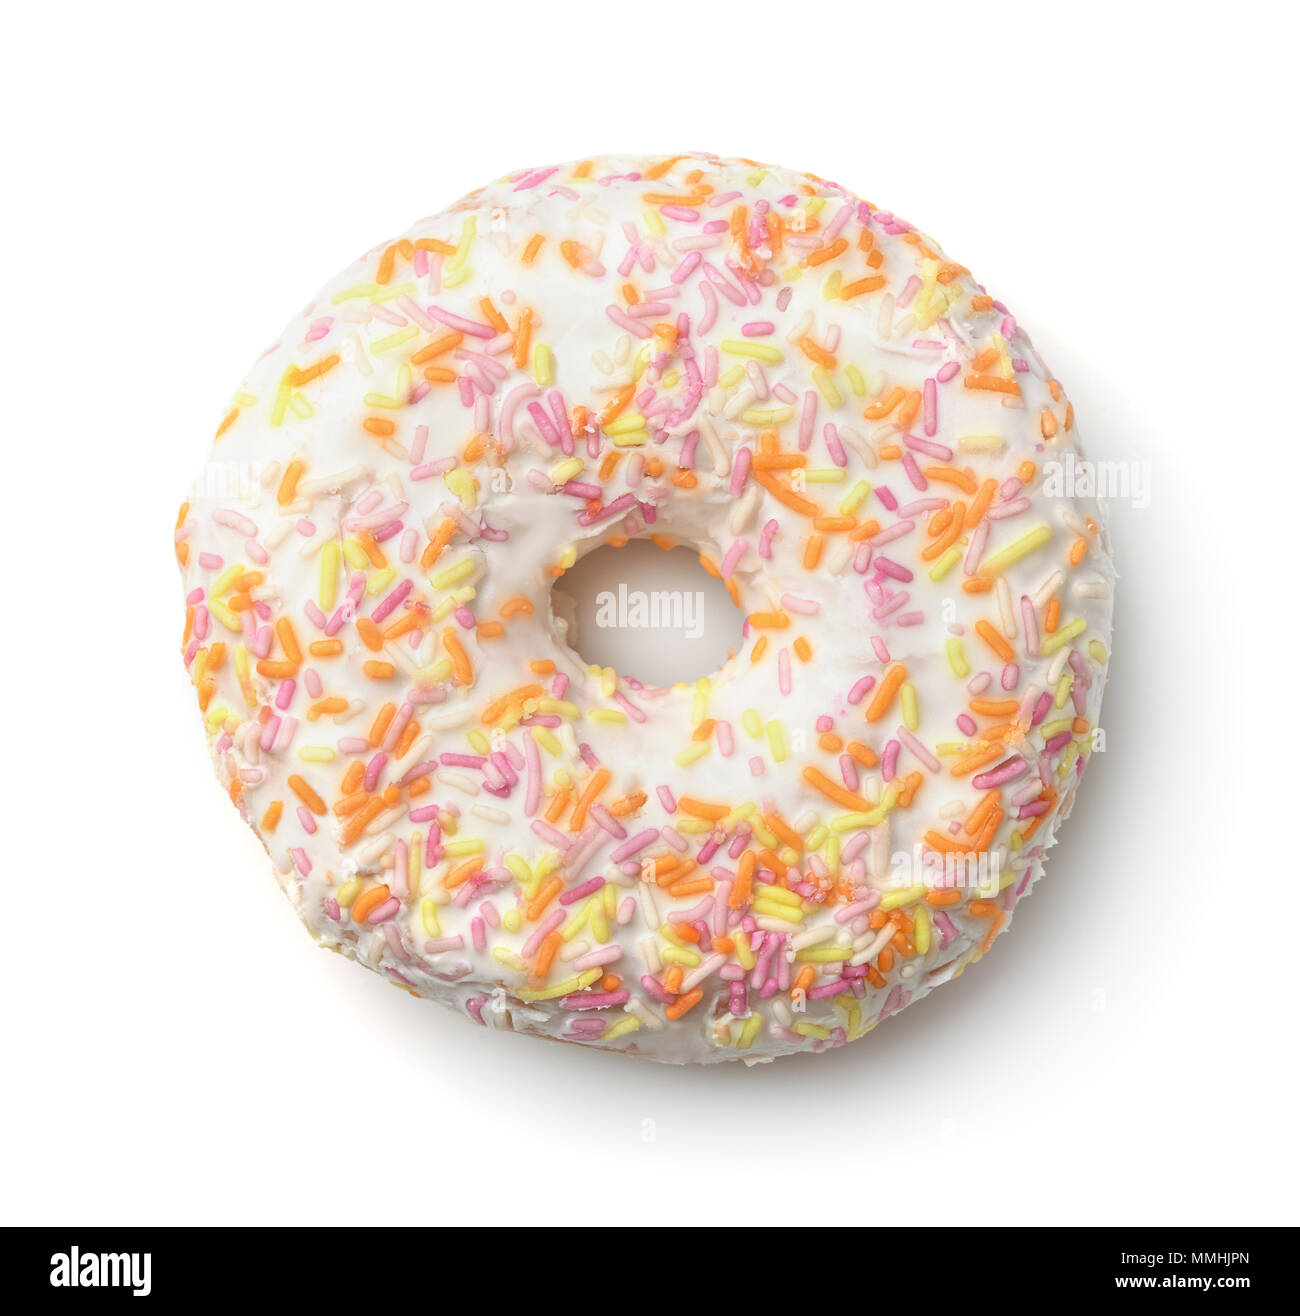 Top view of single glazed doughnut isolated on white Stock Photo